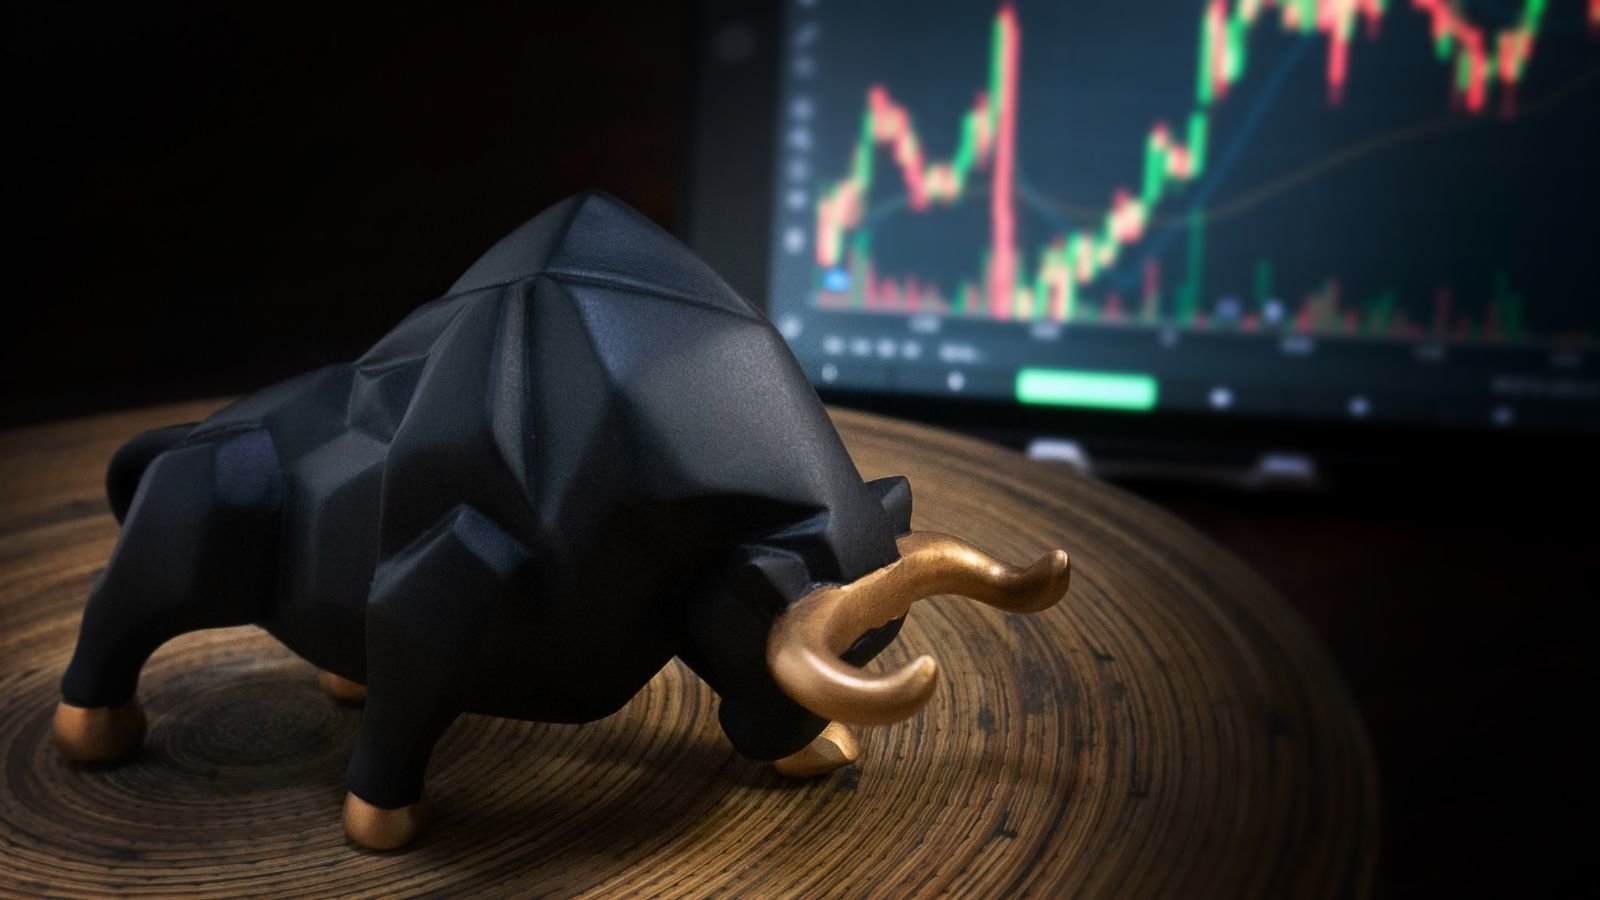 Bull and Trading Platform